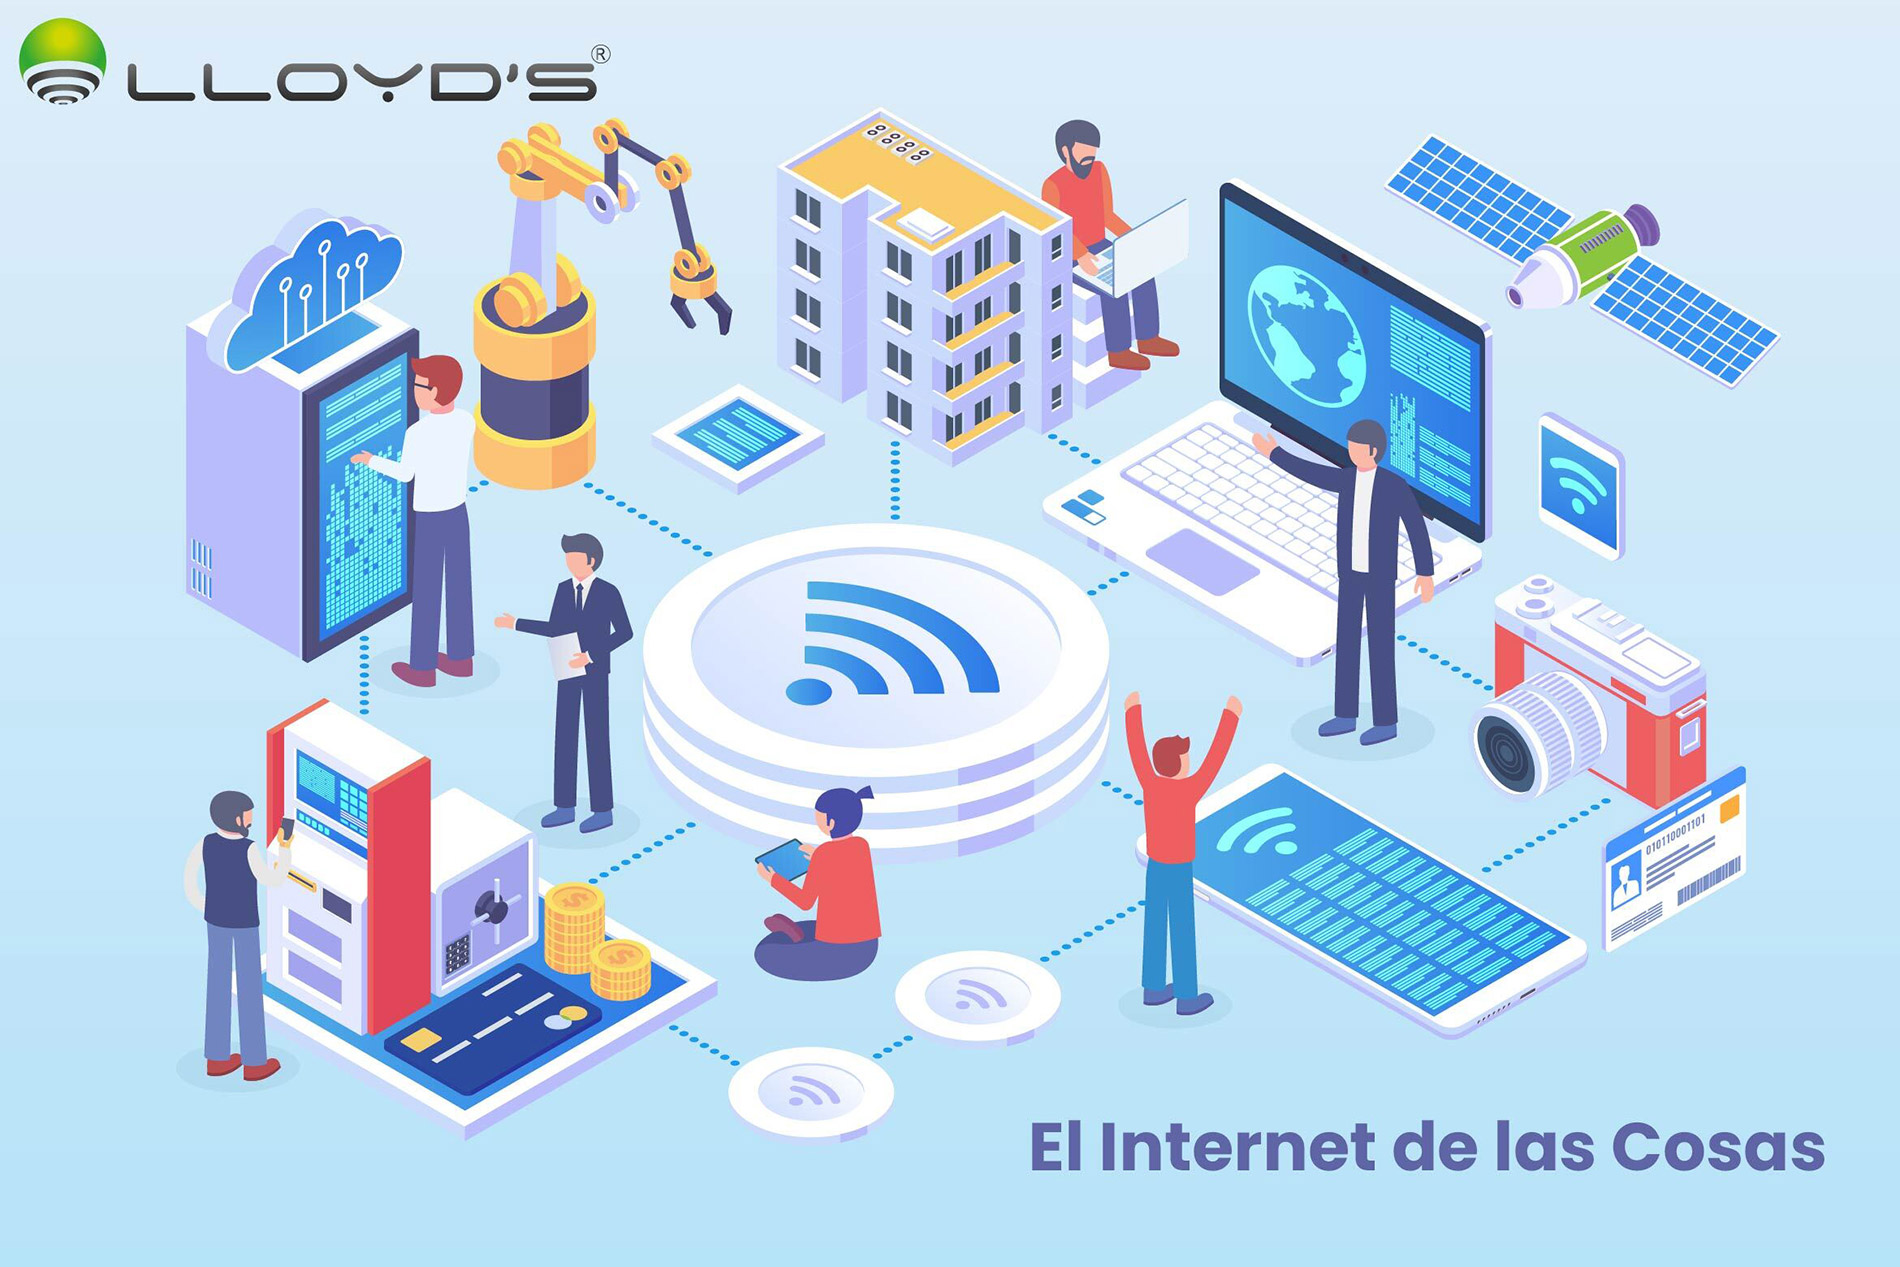 Lloyd’s, única empresa mexicana que participará en Consumer Electronics Show 2022 en el área de Hogares Inteligentes